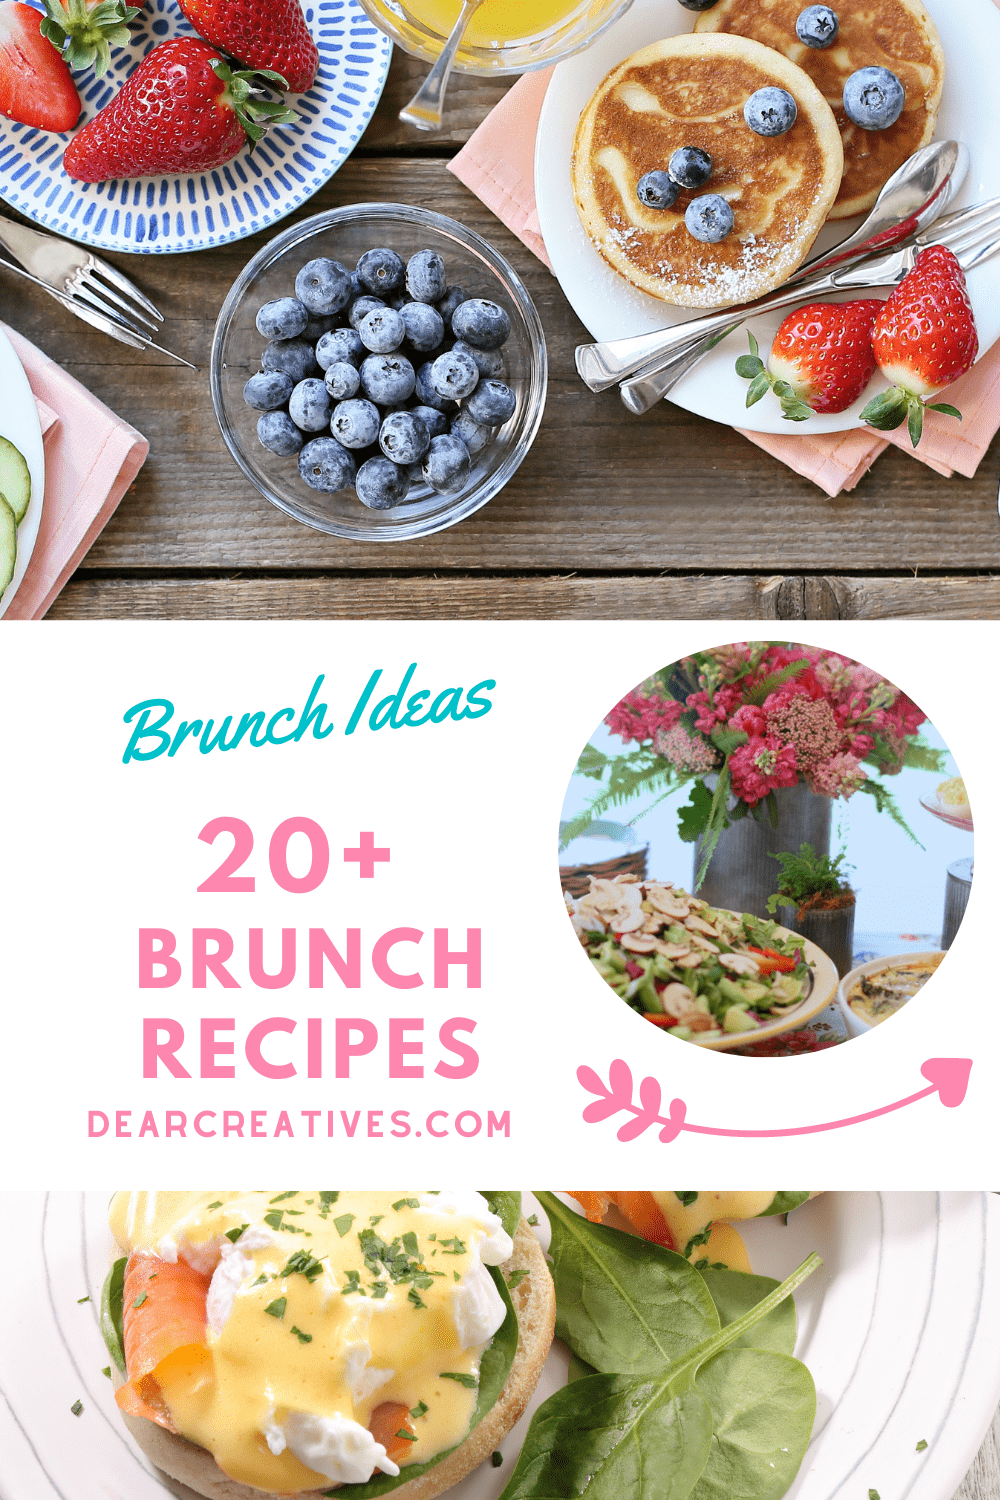 Brunch Recipe Ideas – 20+ Recipes To Make At Home!